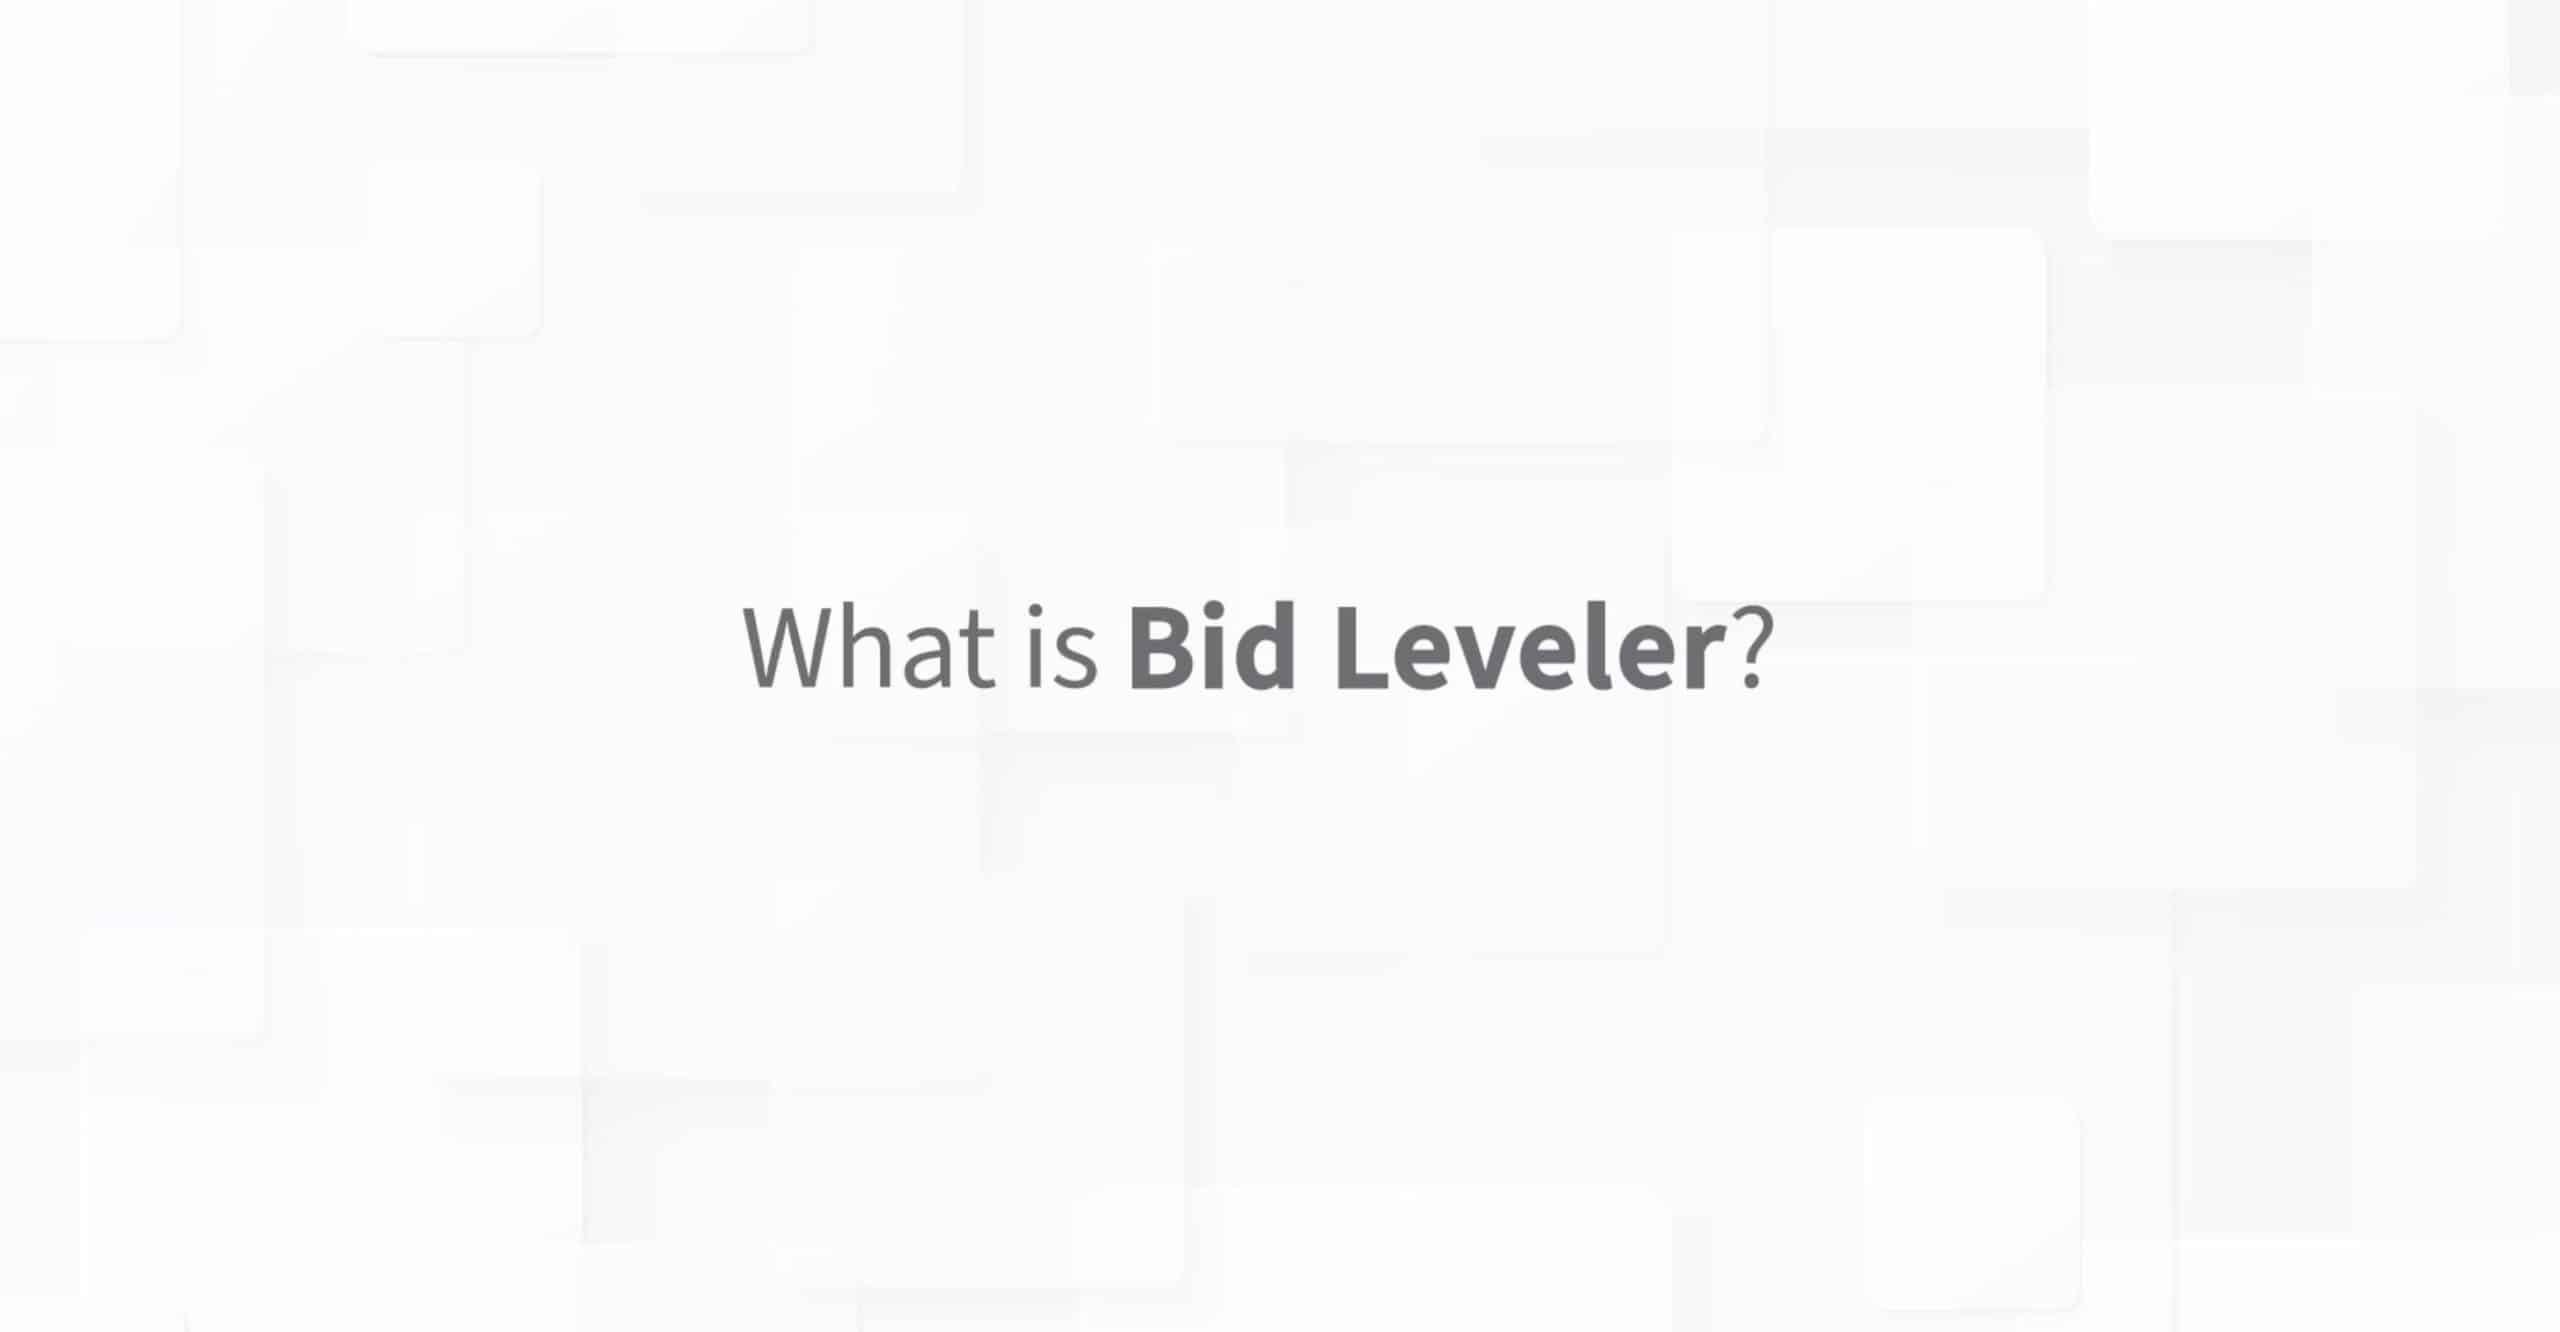 What is Bid Leveler?